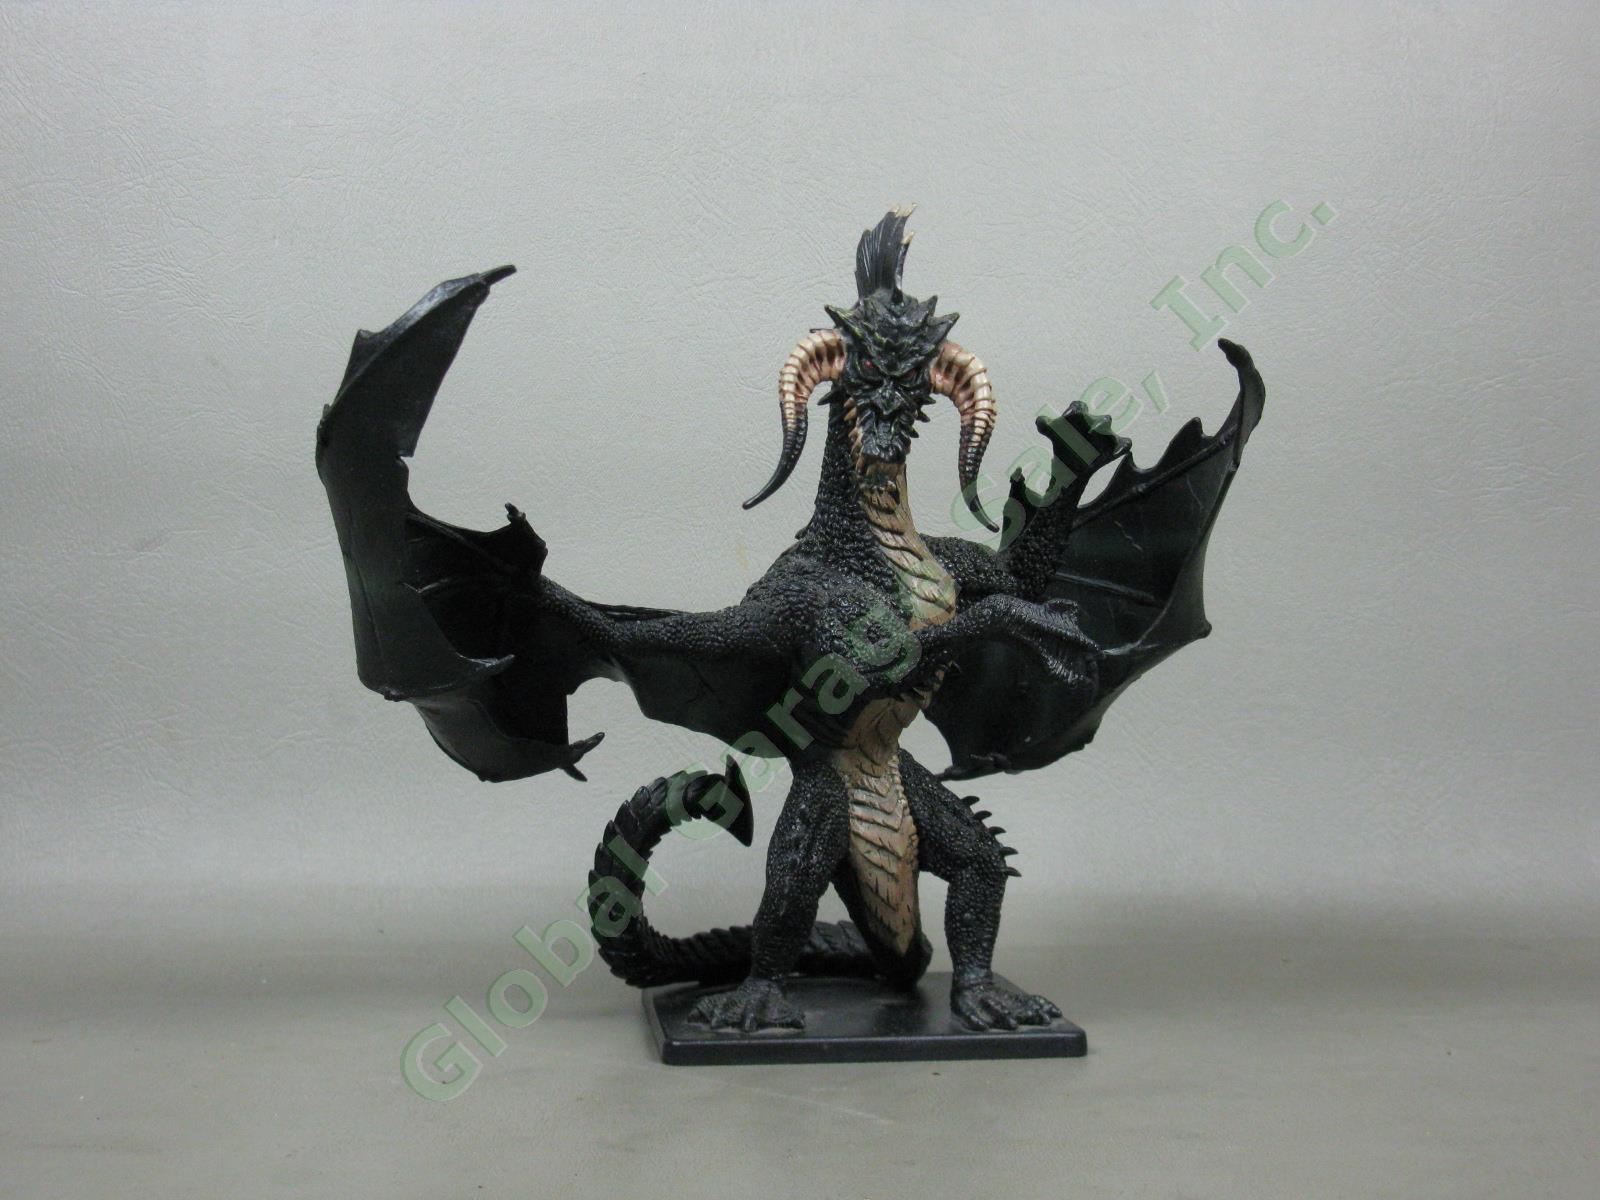 D&D Icons Gargantuan Black Dragon Limited Edition Collector Item Figure Figurine